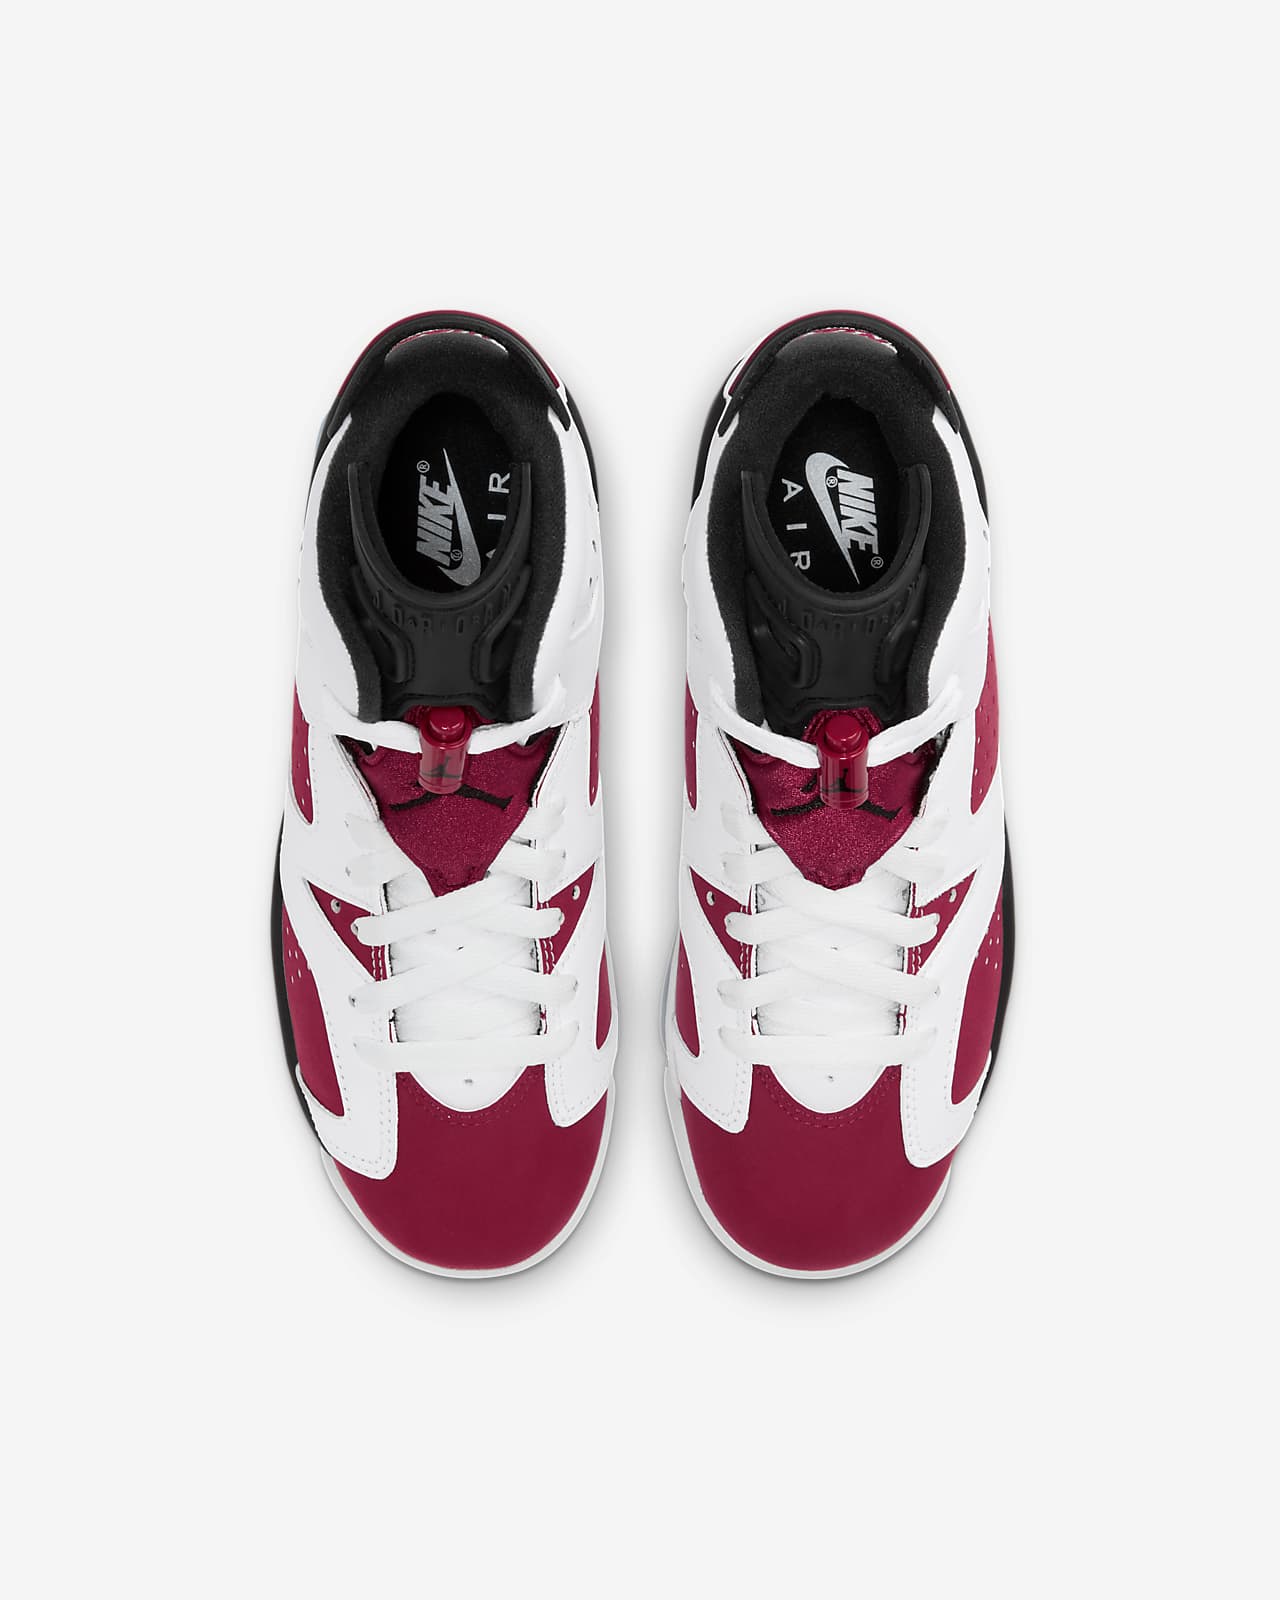 Air Jordan 6 Retro Schuh Fur Altere Kinder Nike De